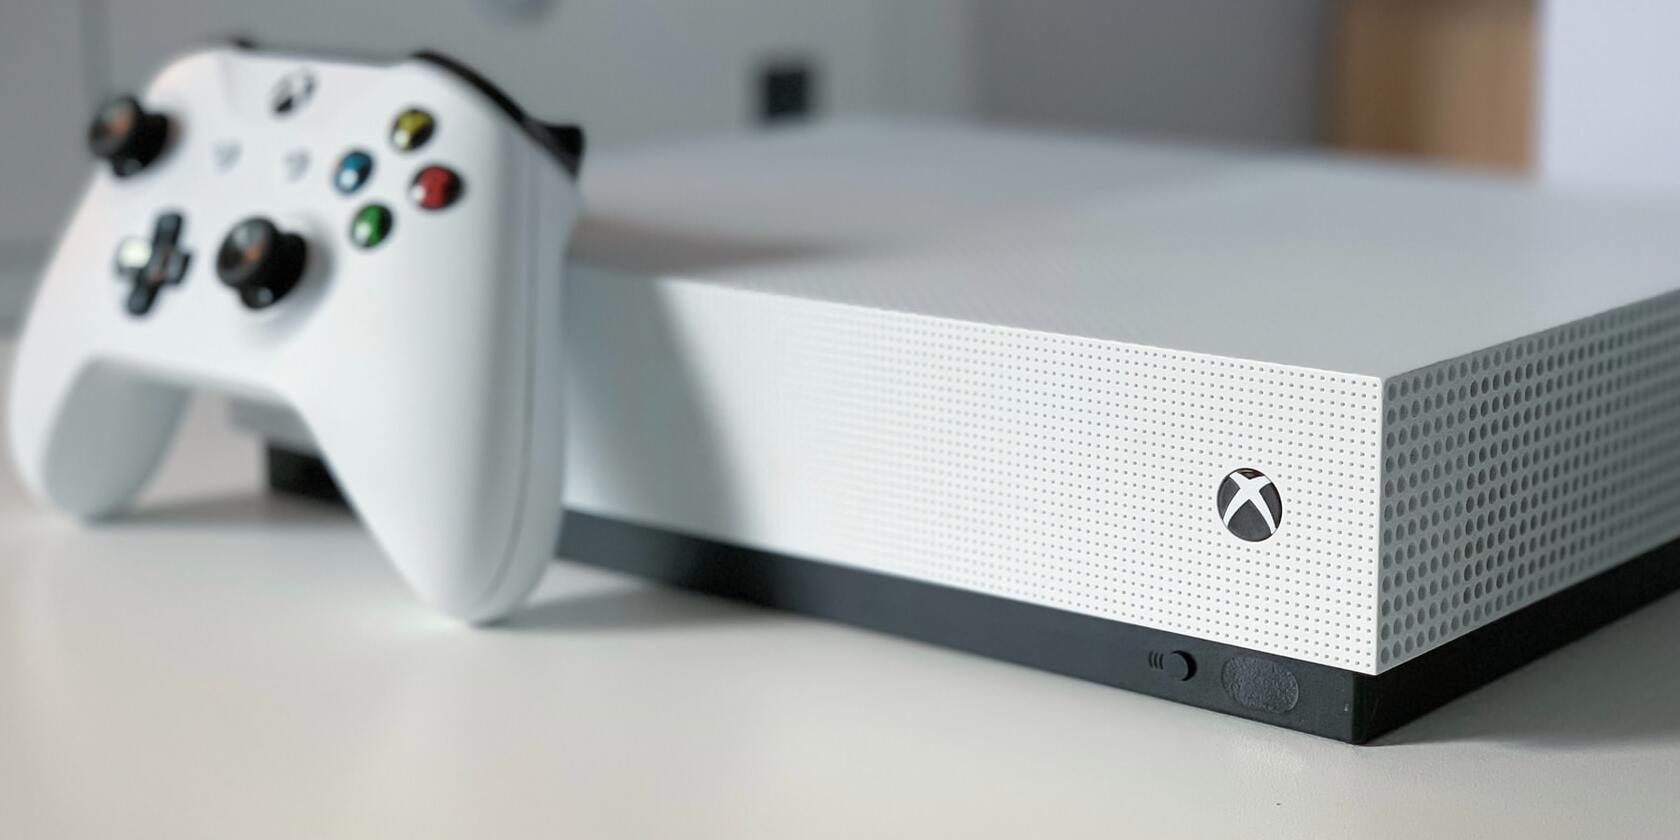 Image of a white Xbox console